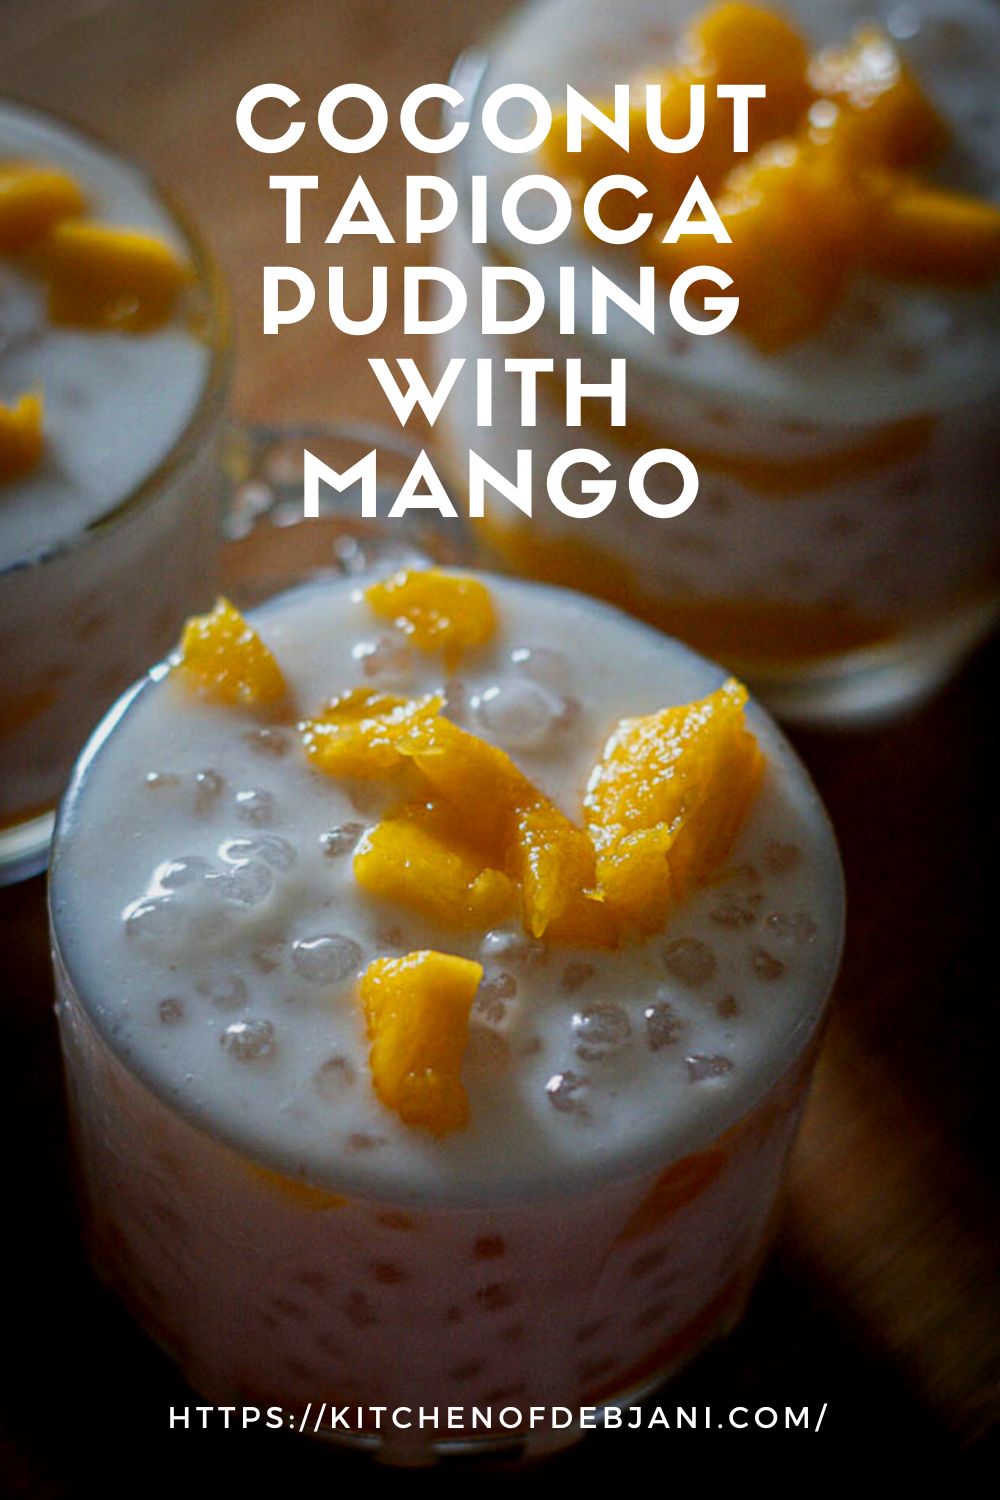 %Coconut Tapioca Pudding with Mango Recipe debjanir rannaghar Pinterest Pin